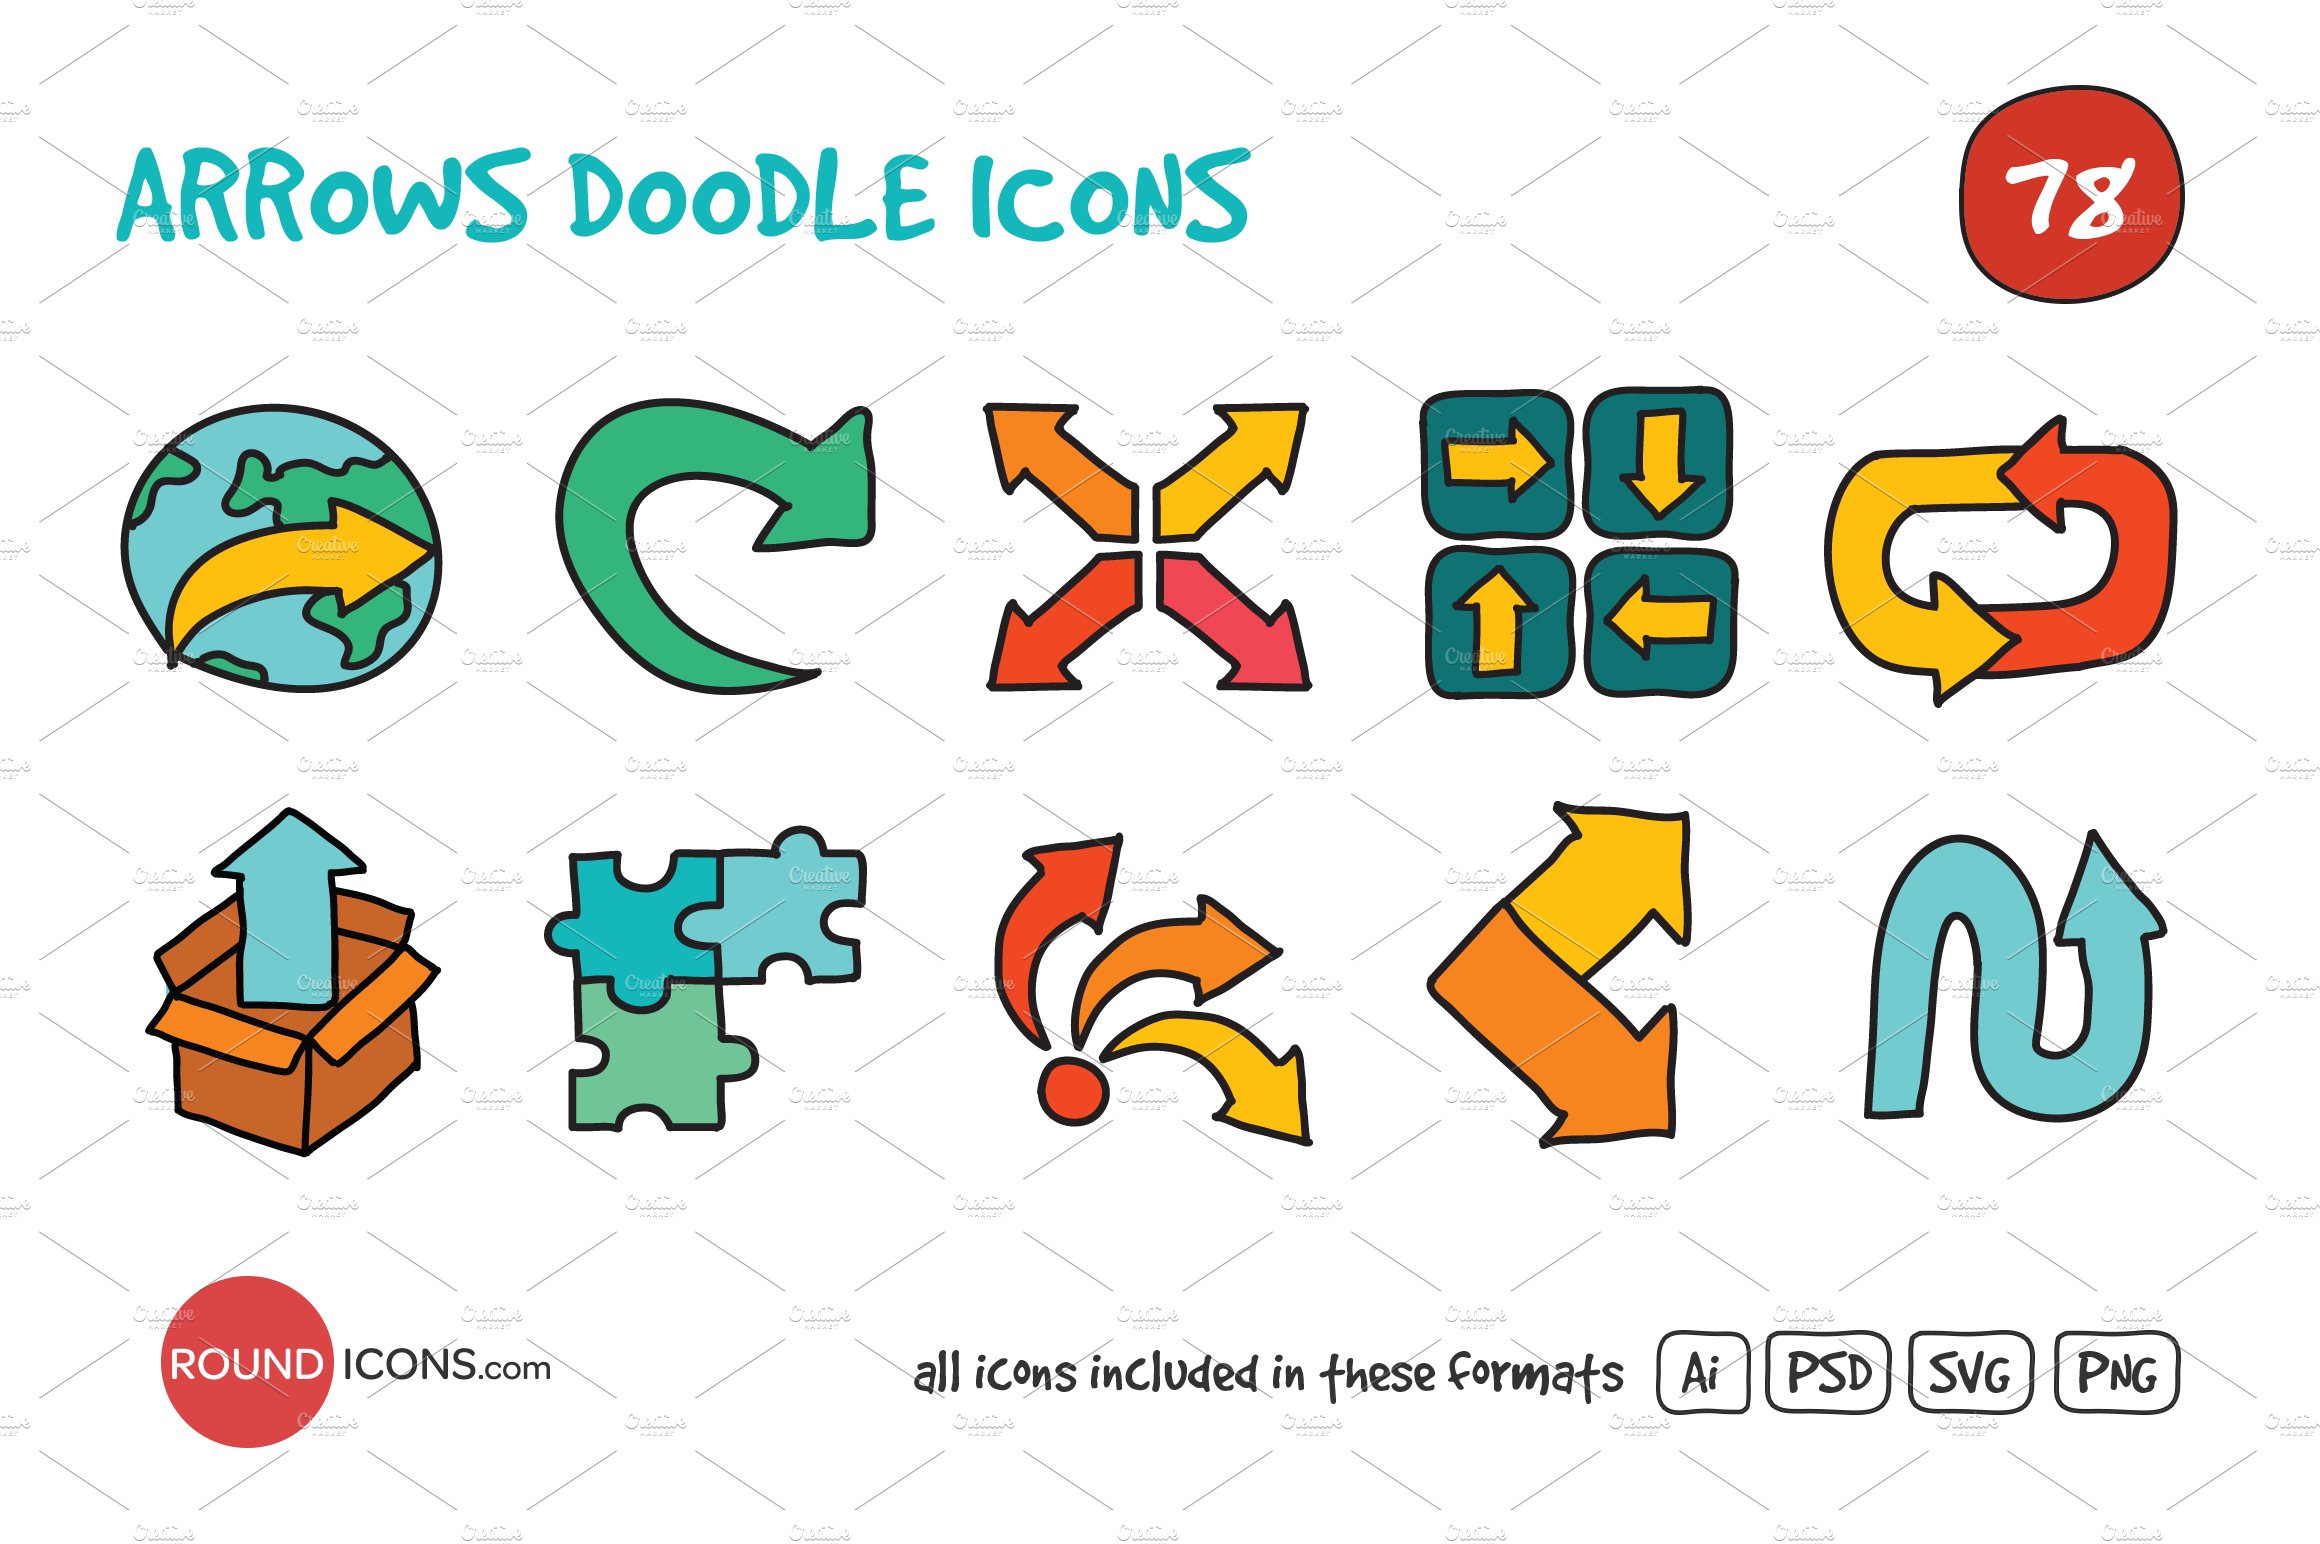 Arrows Doodle Icons Set cover image.